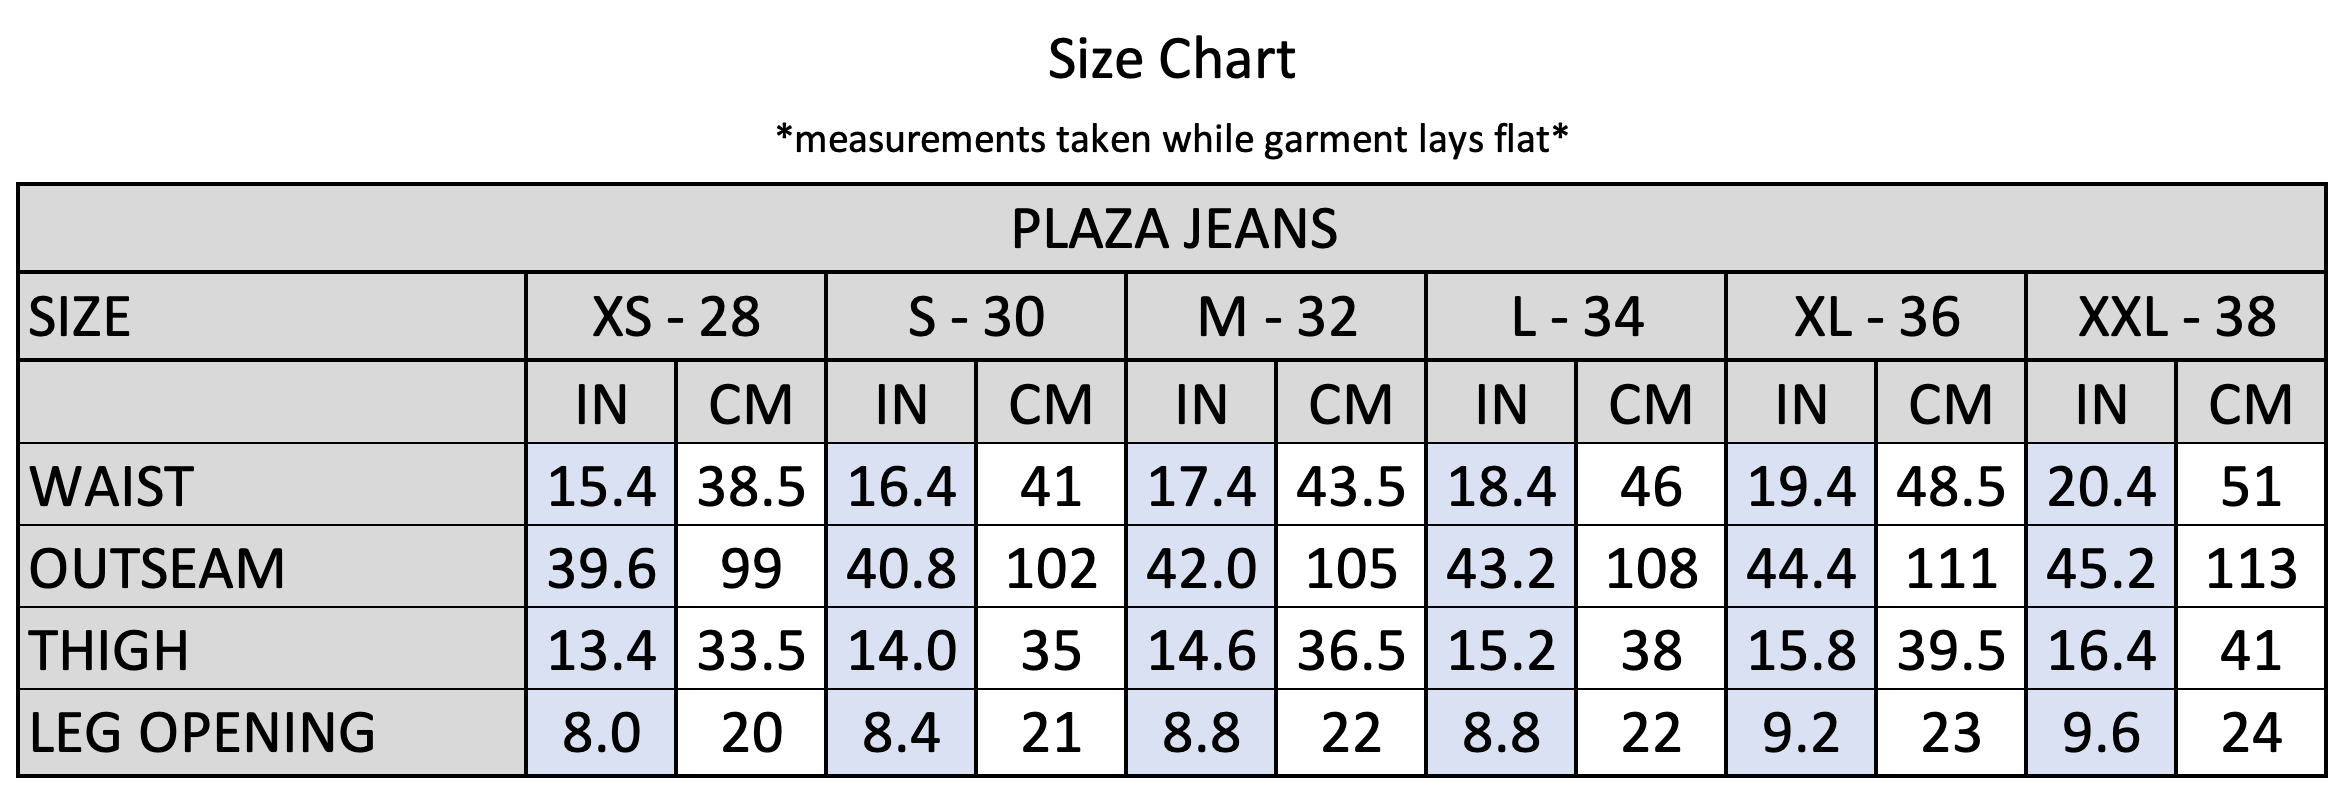 Plaza Jean Size Chart